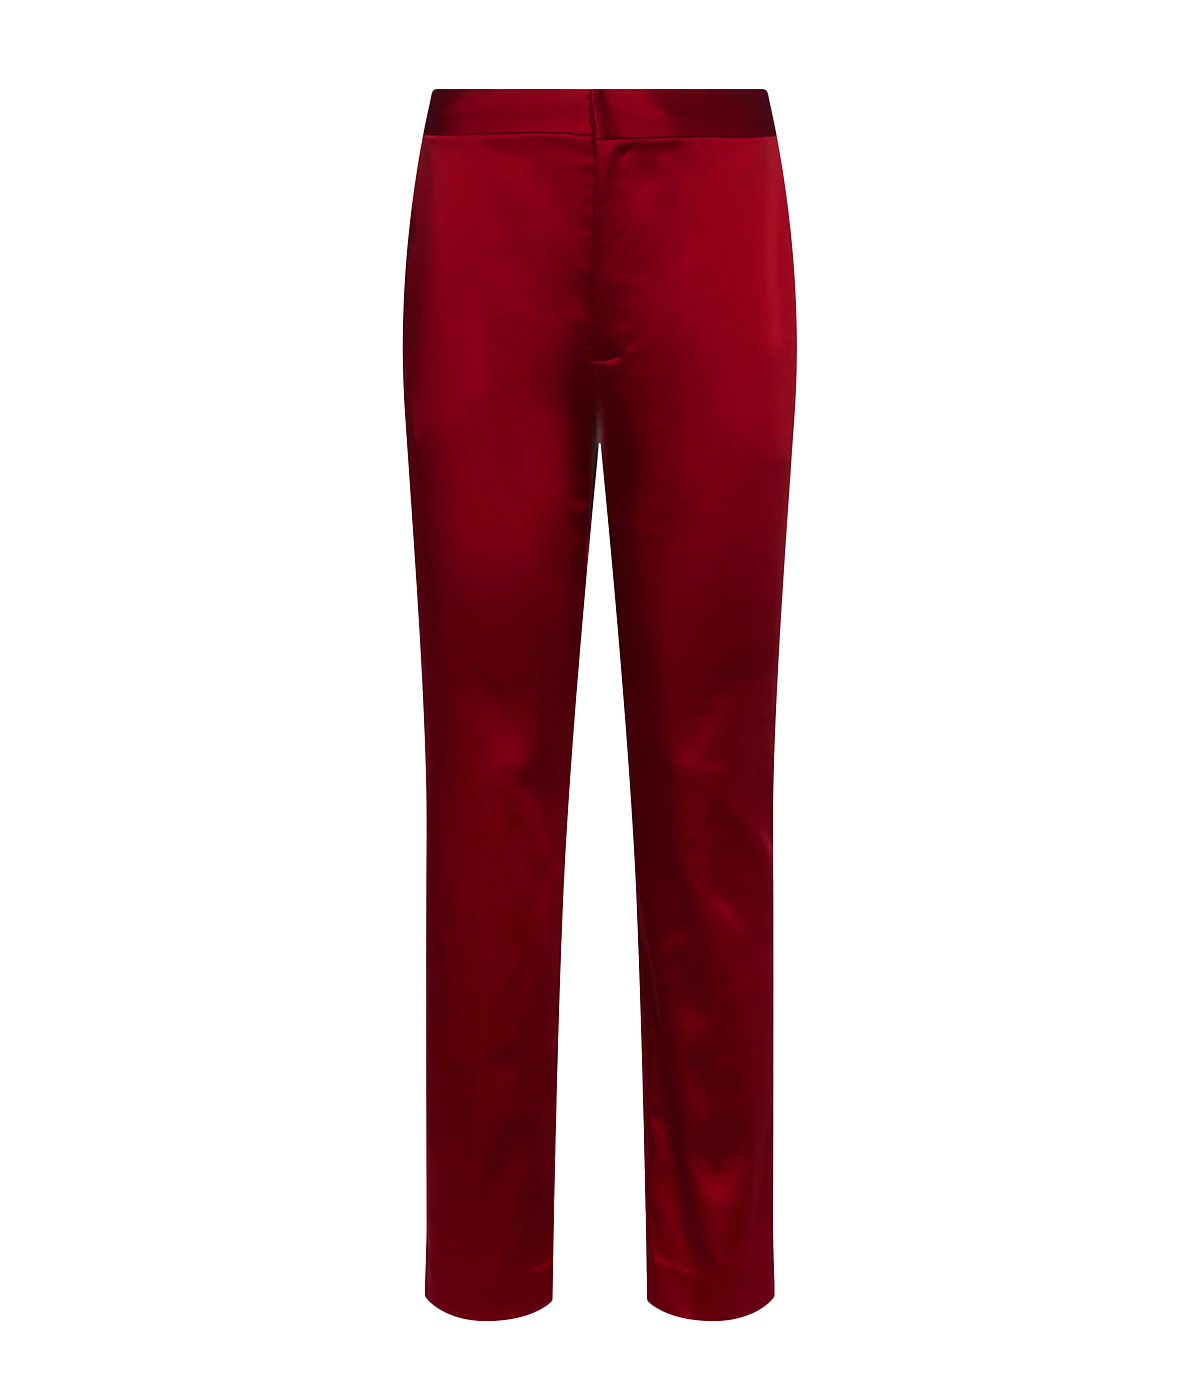 Rebel Trouser in Dark Tango Red